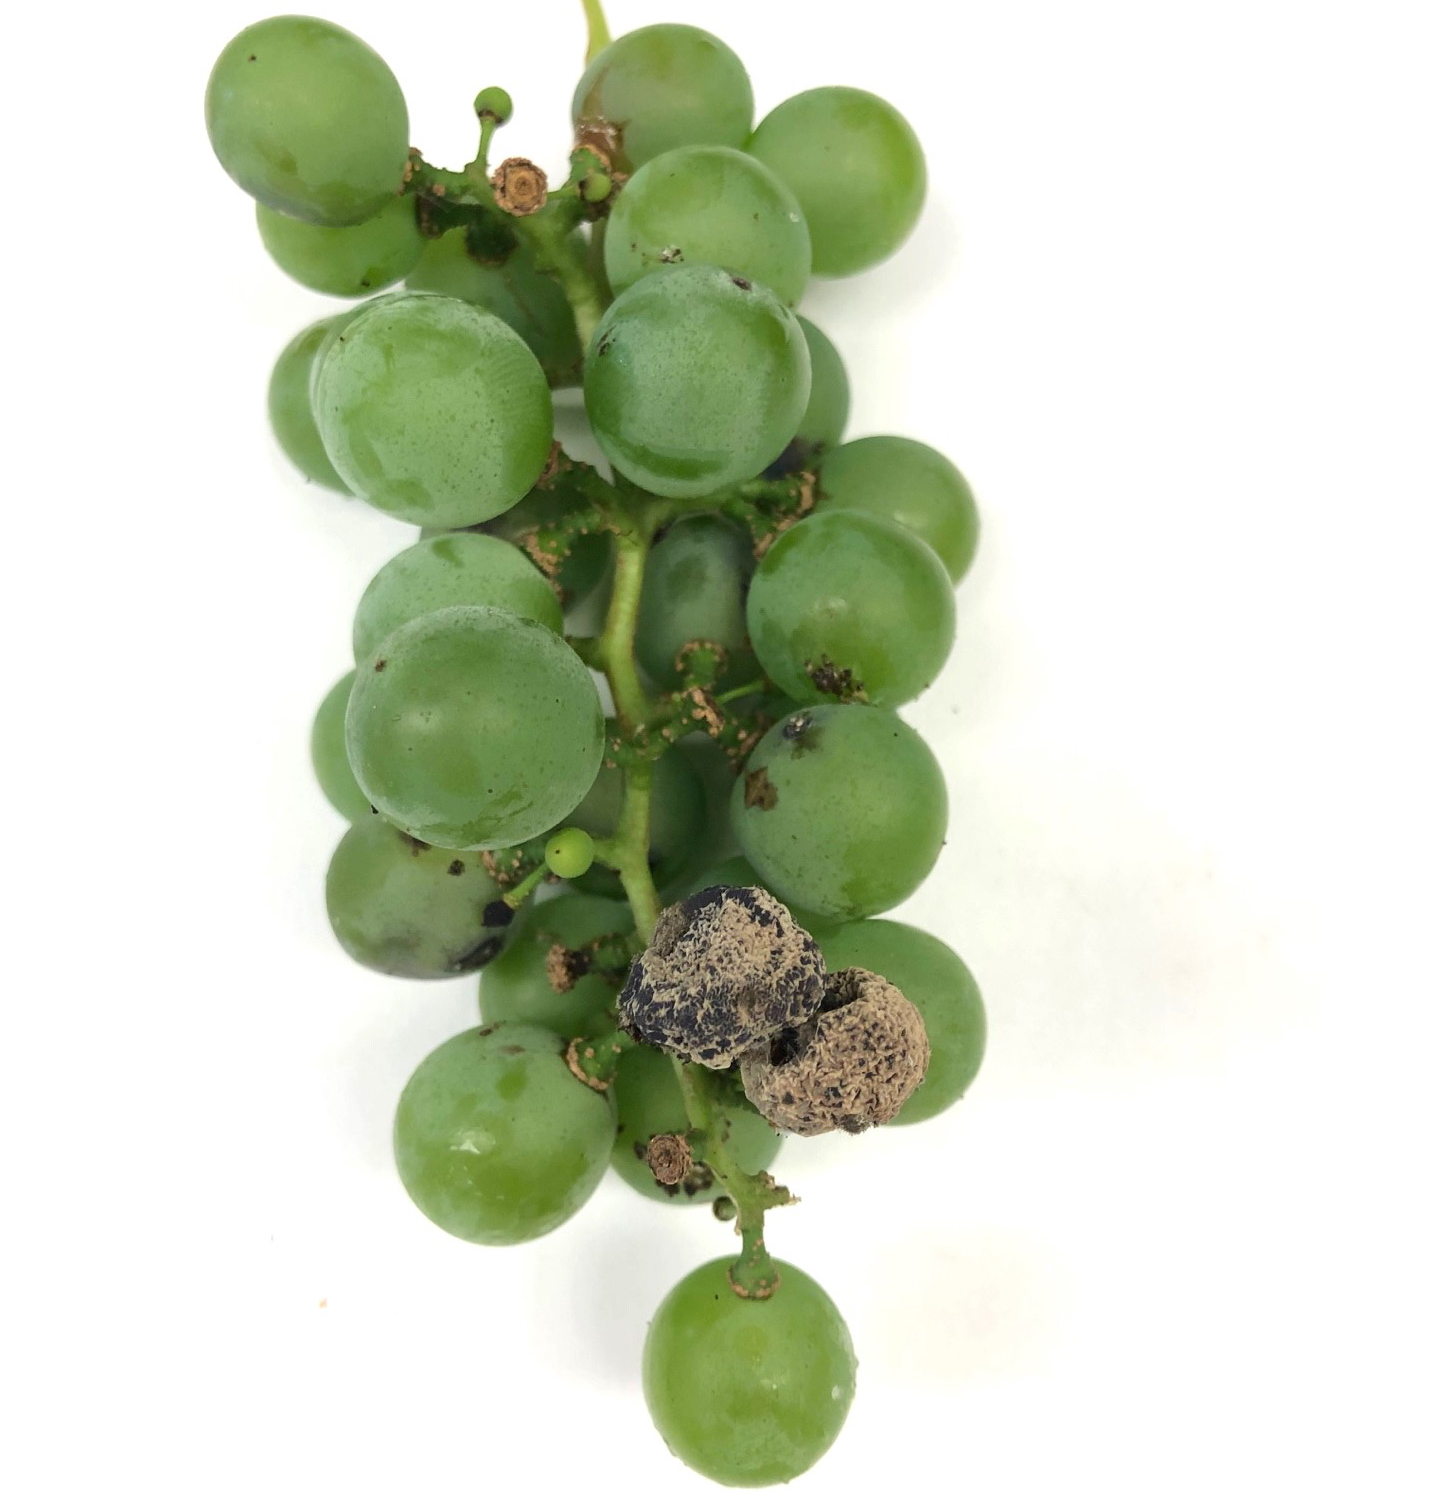 Botrytis bunch rot on Niagara grapes 